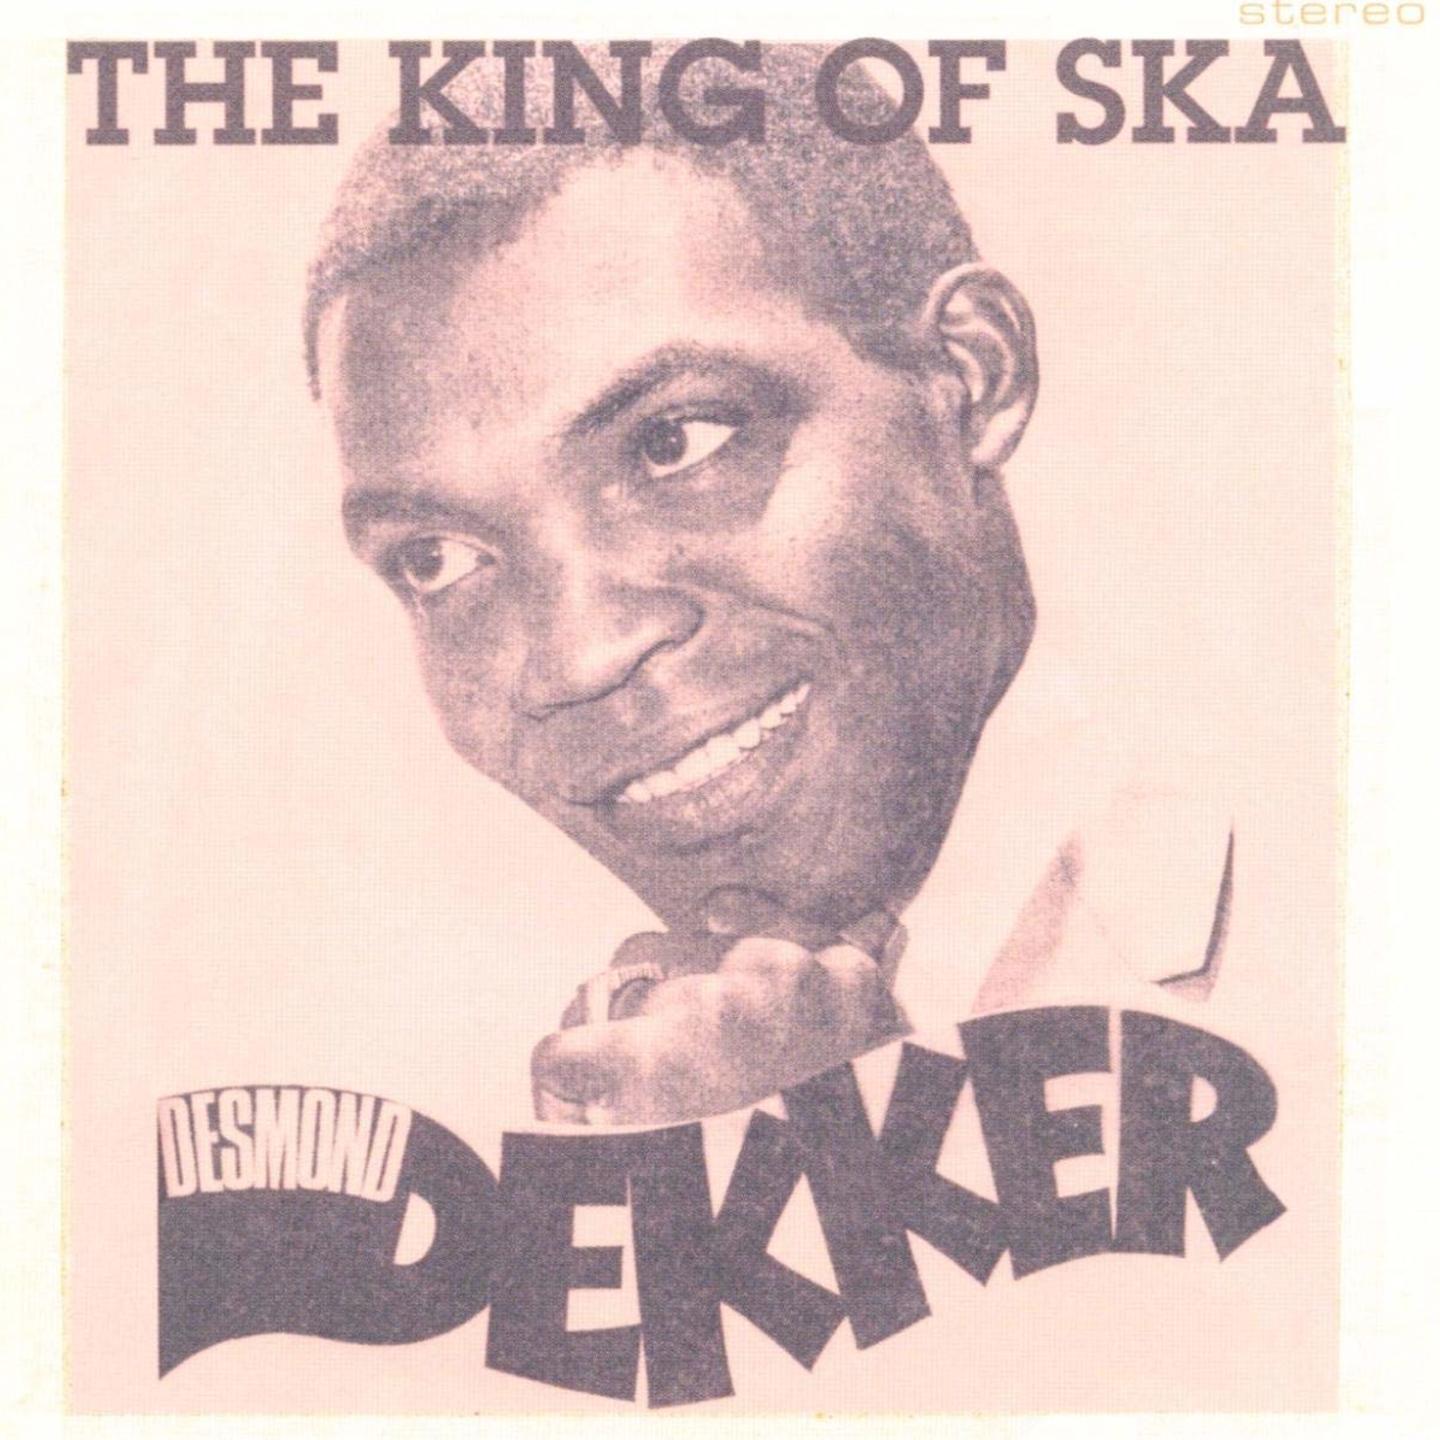 DESMOND DEKKER - King Of Ska LP Red Vinyl